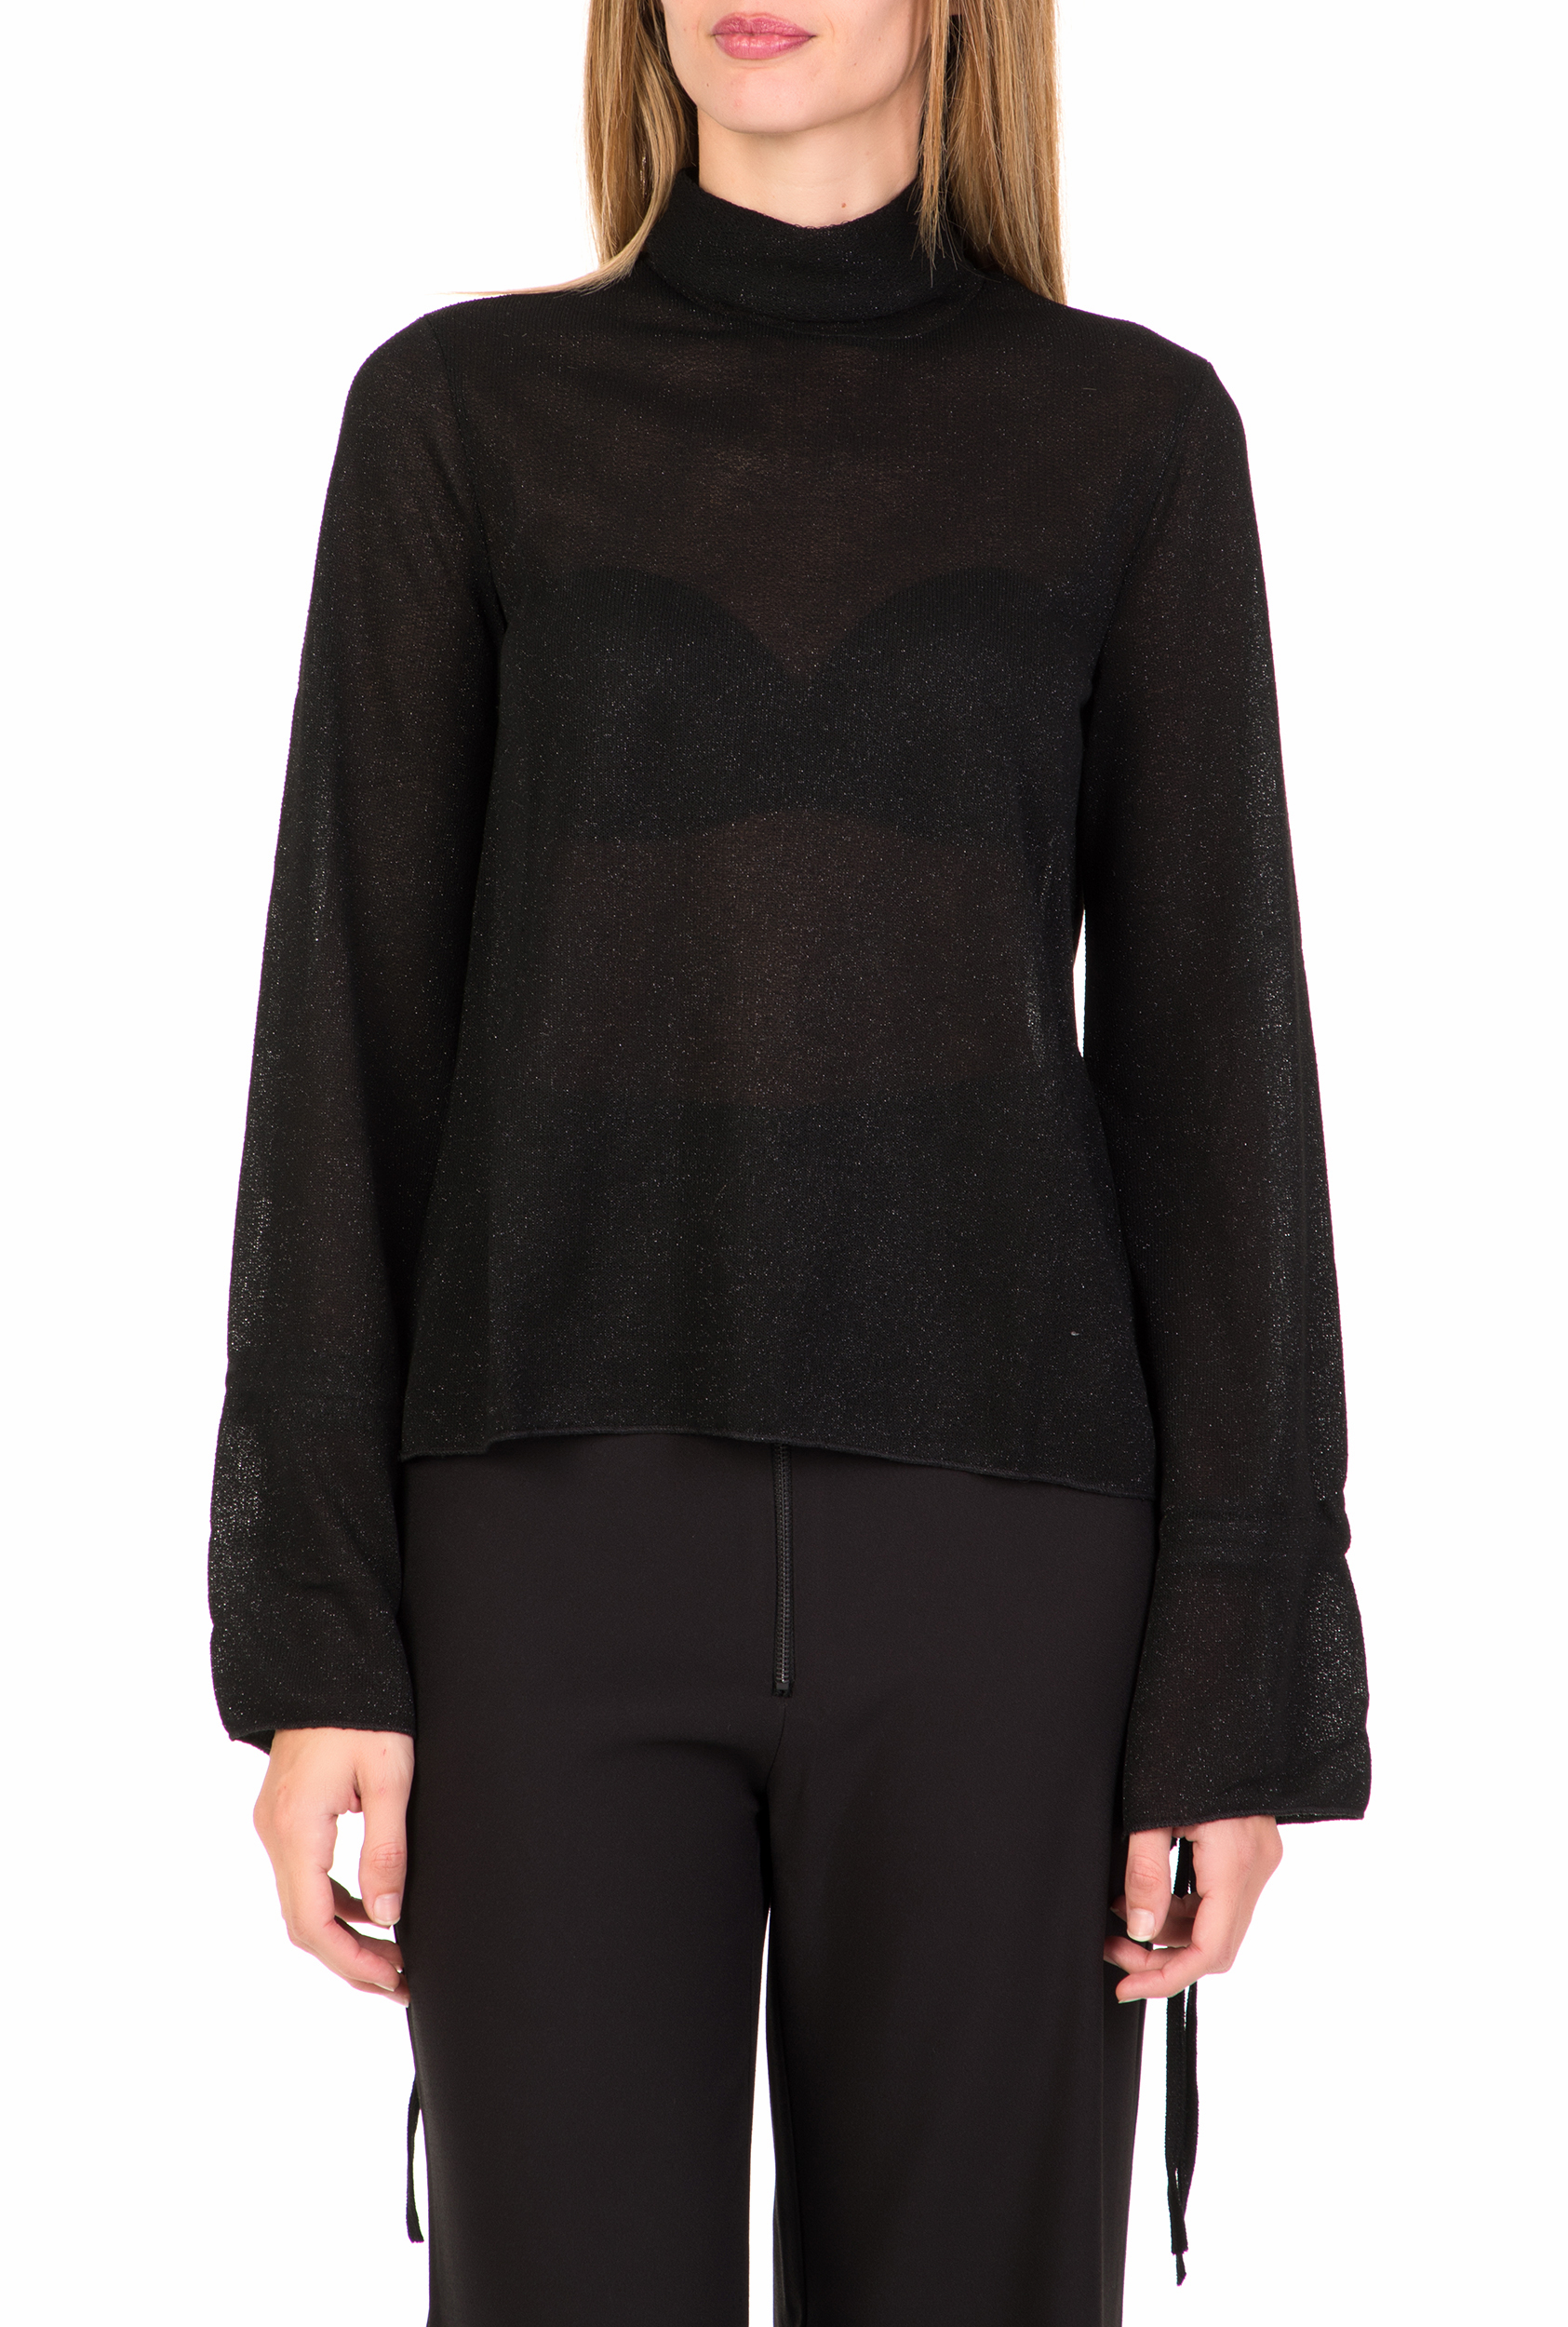 LA DOLLS - Γυναικεία ζιβάγκο μπλούζα GLAMOROUS μαύρη Γυναικεία/Ρούχα/Μπλούζες/Μακρυμάνικες